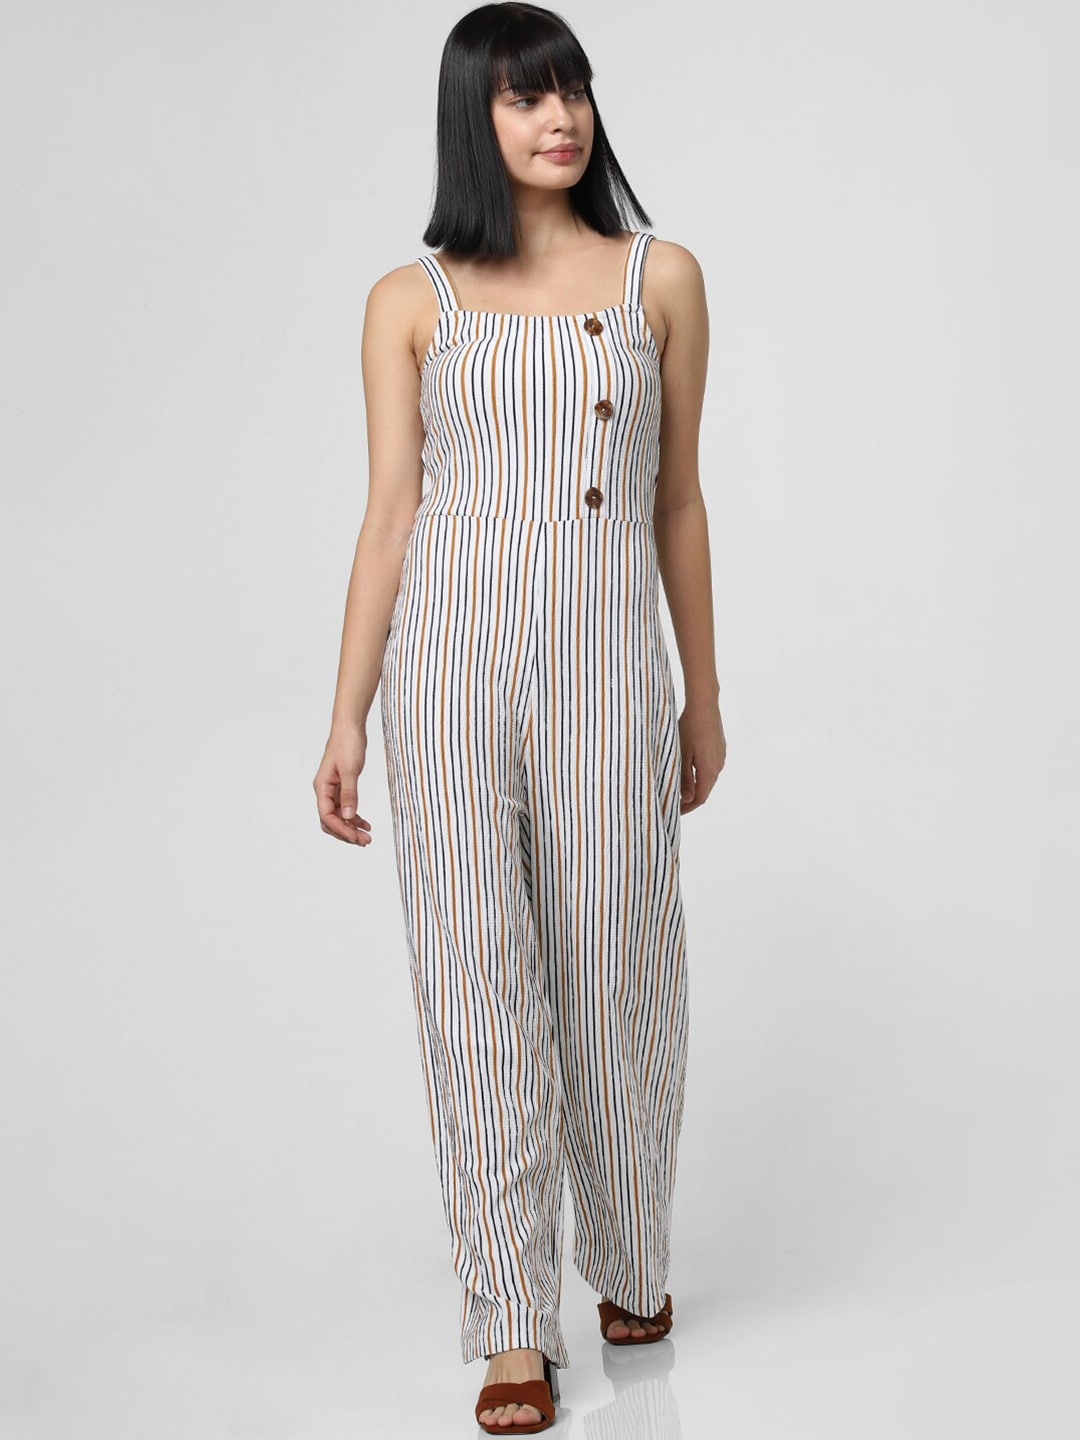 Vero Moda White & Beige Striped Basic Jumpsuit Price in India